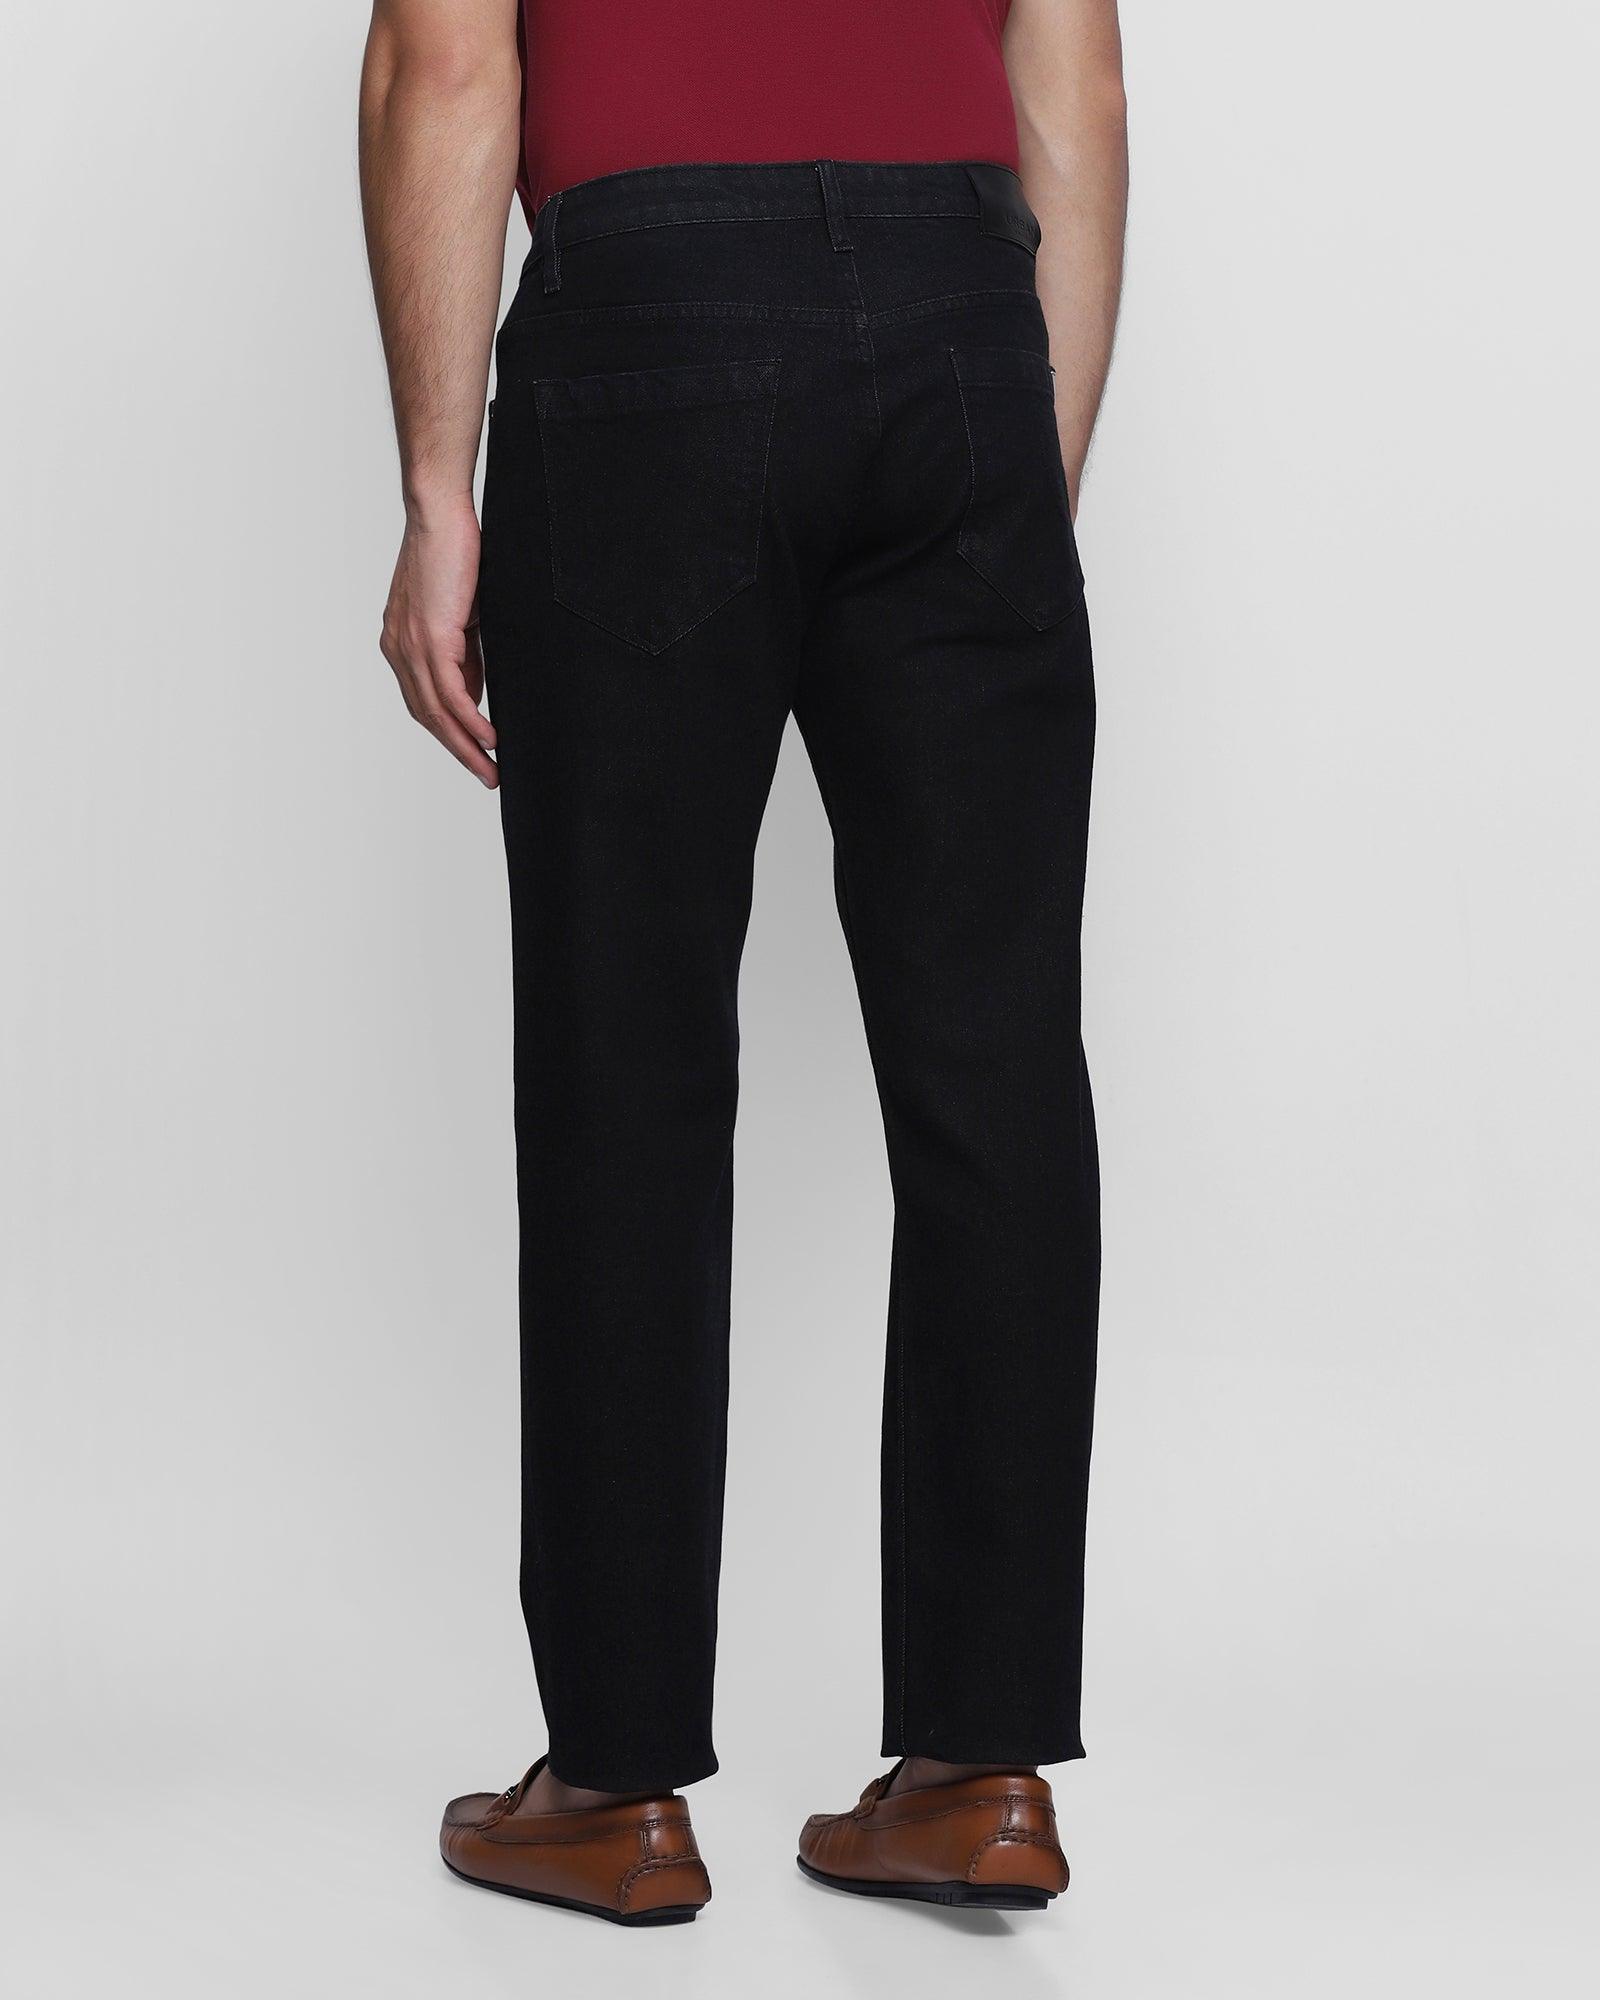 Slim Comfort Buff Fit Black Jeans - Fable